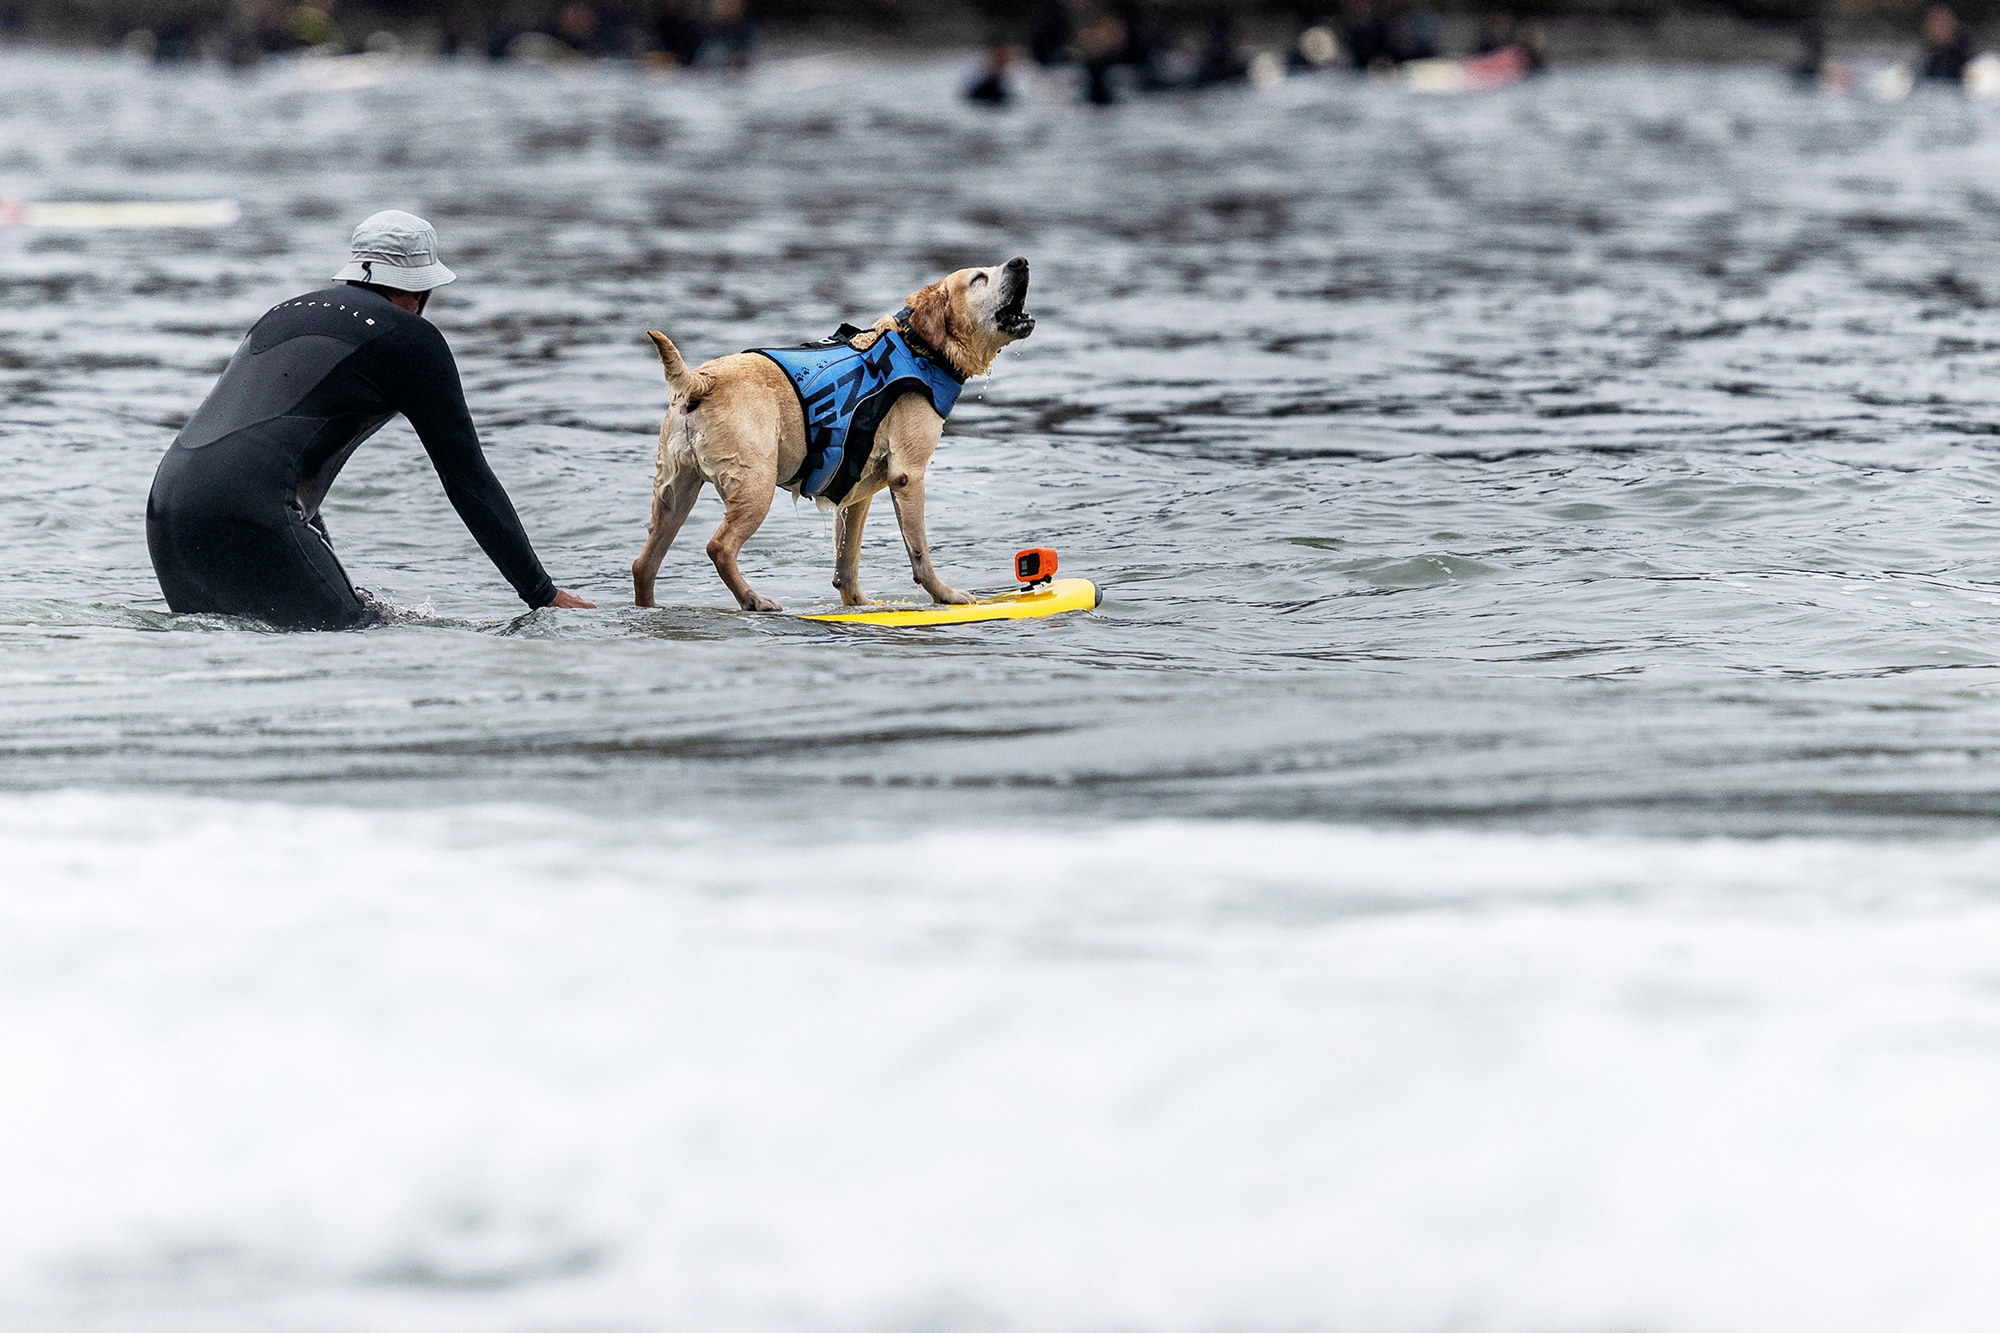 a surfing dog in a blue jacket howls joyfully